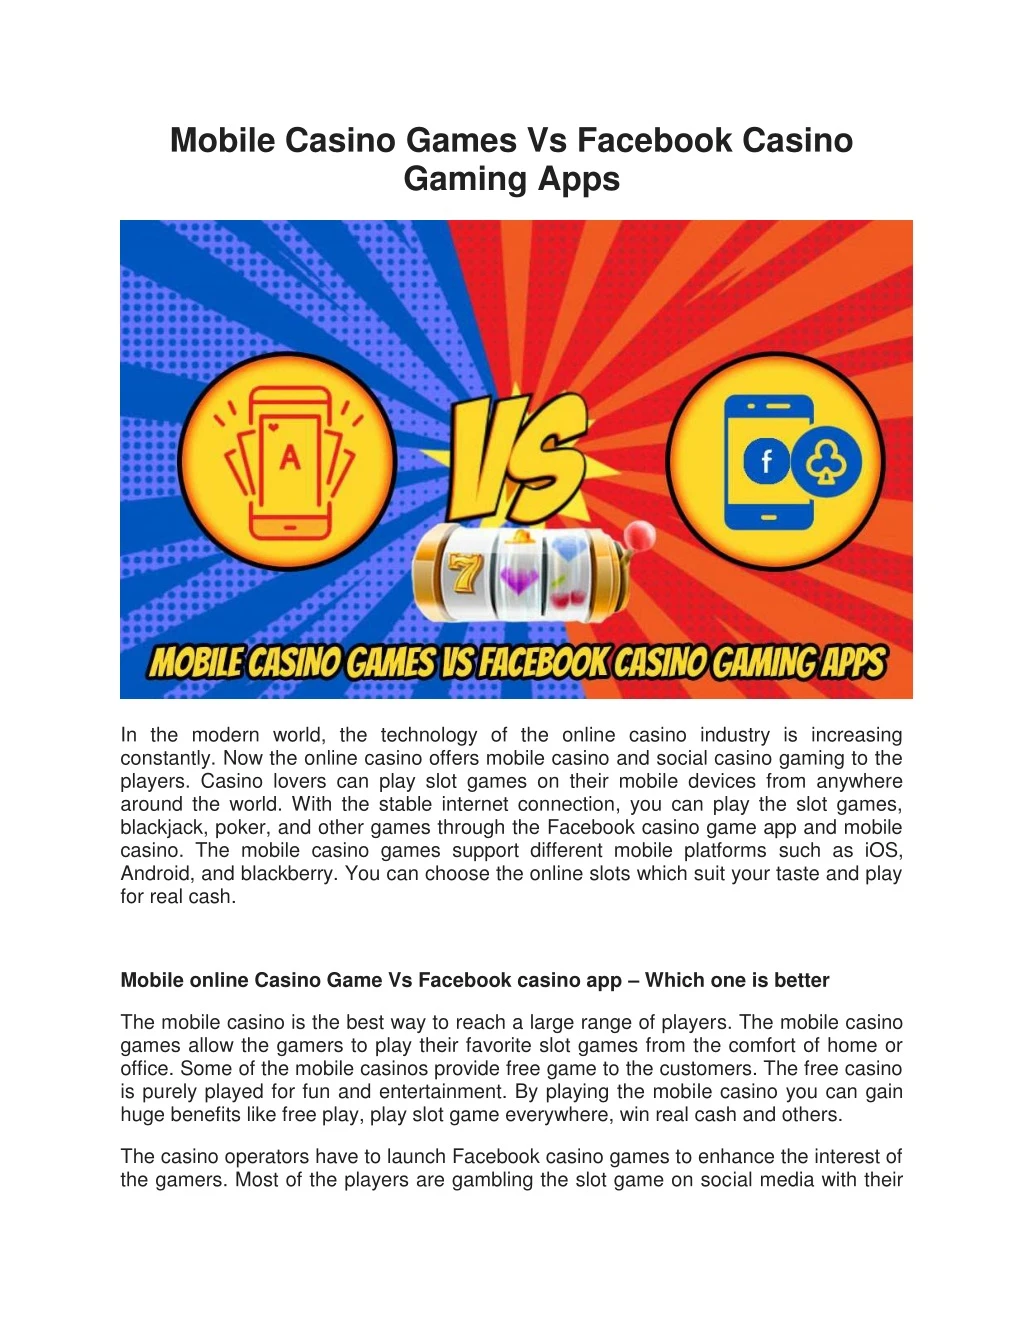 mobile casino games vs facebook casino gaming apps